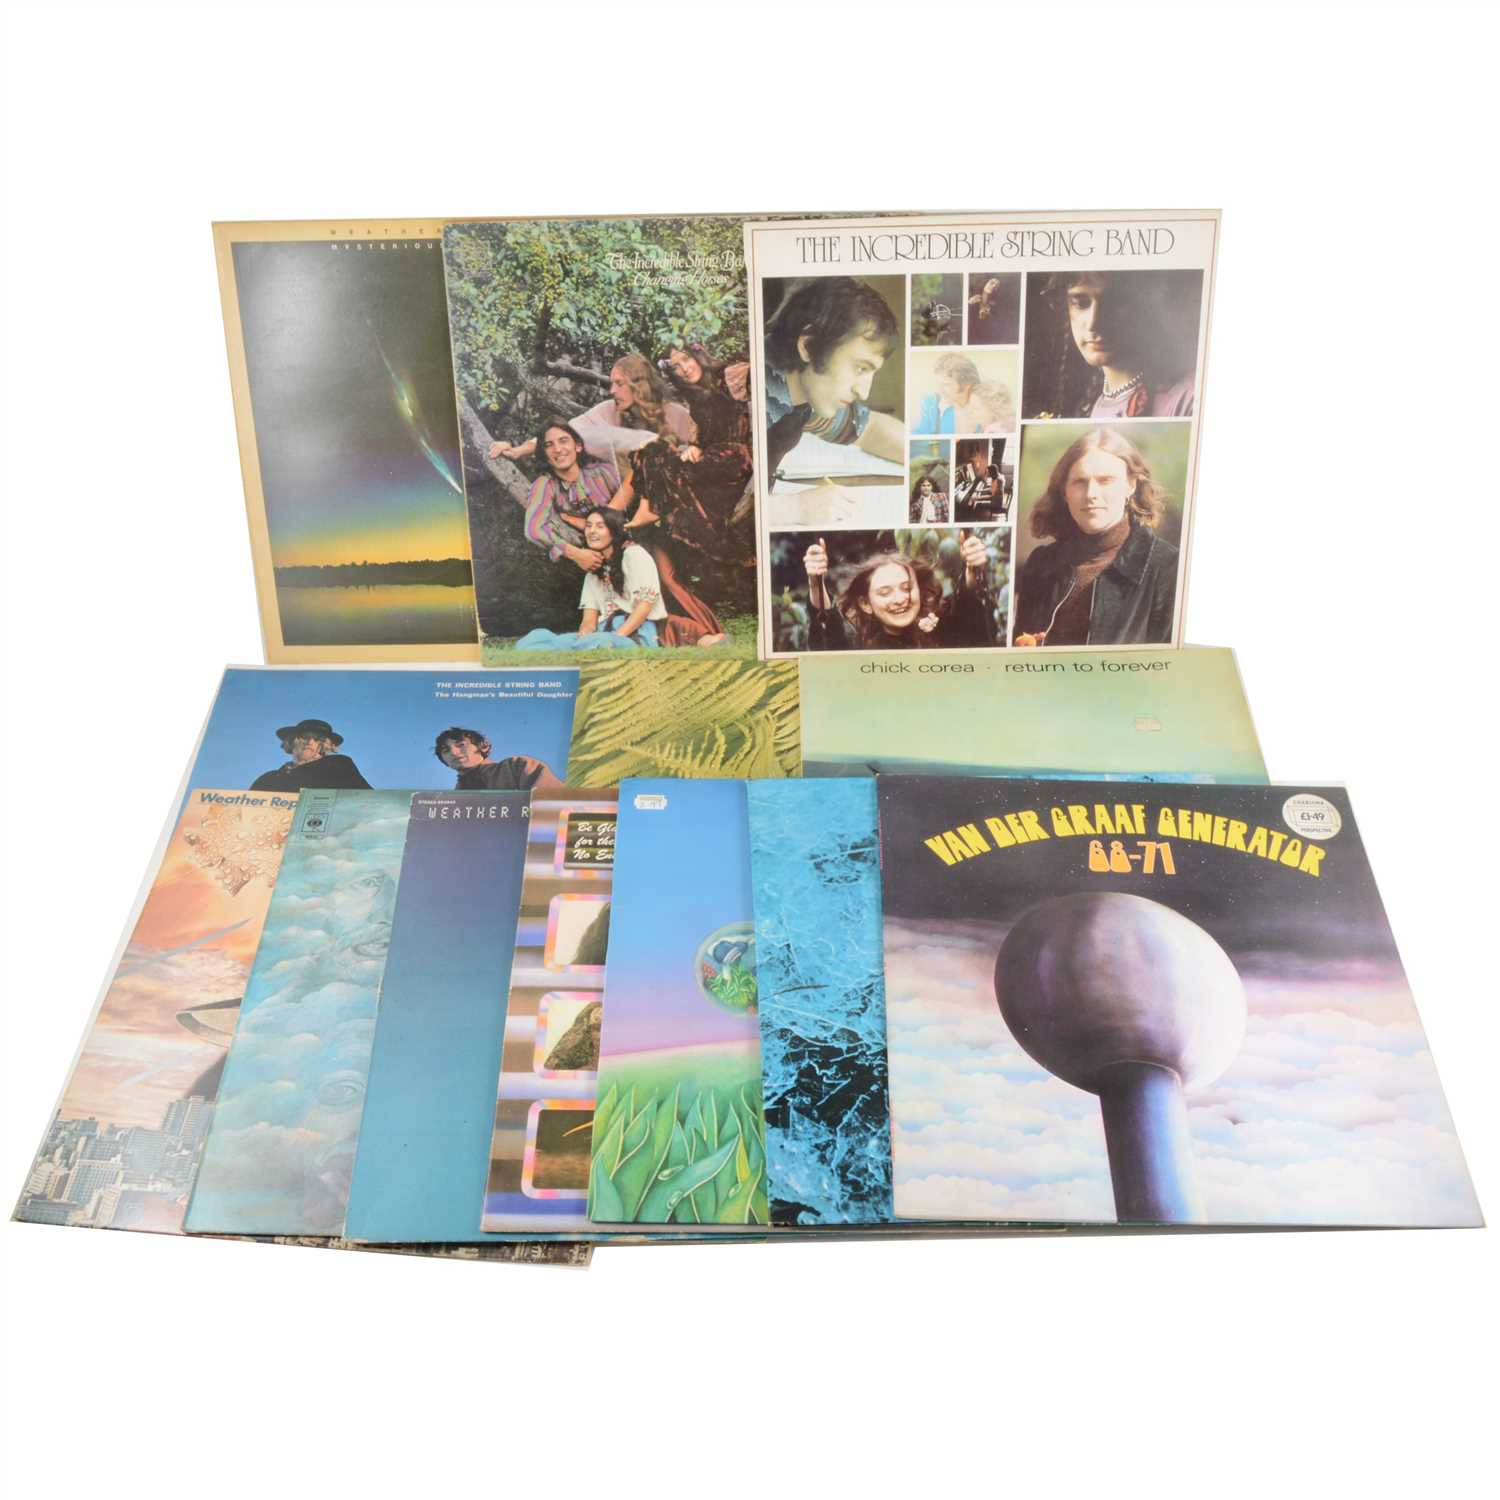 Lot 678 - Thirteen vinyl LP music records; mostly Progressive Rock and Rock music, including Van Der Graaf Generator